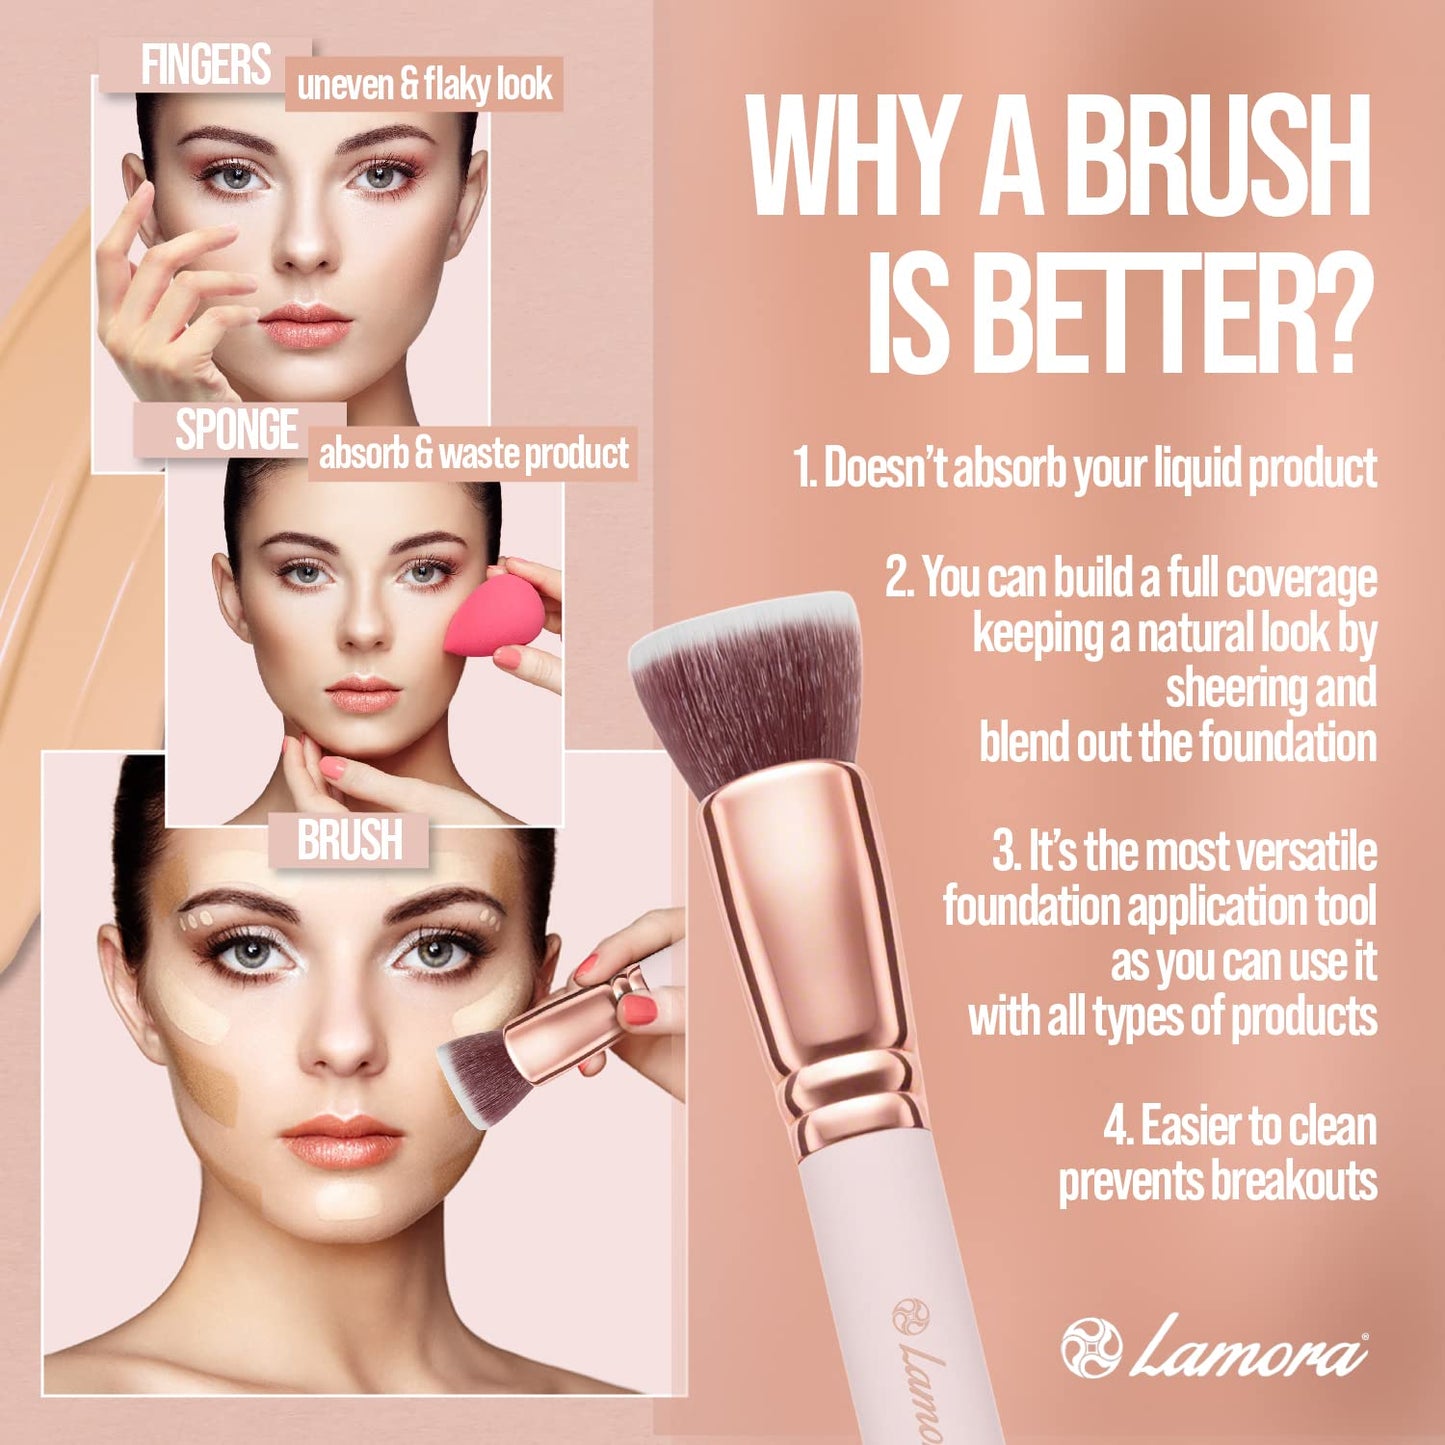 Flat Top Kabuki Foundation Brush - Premium Makeup Face Brush For Liquid, Cream, Powder - Blending, Buffing, Stippling Brush - Pro Quality Synthetic Dense Bristles